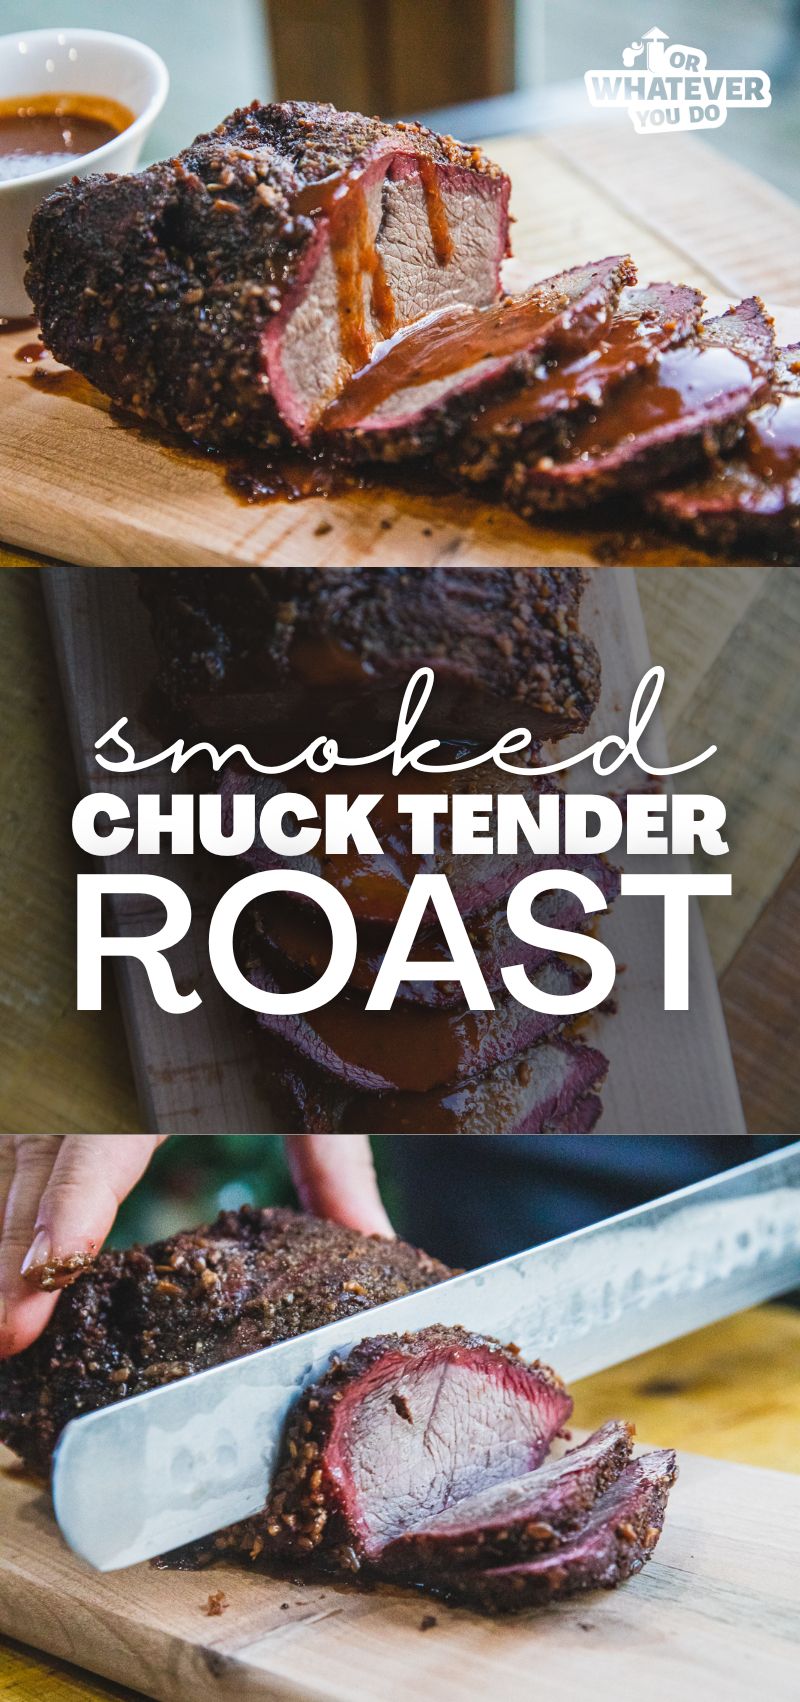 Smoked Chuck Tender Roast